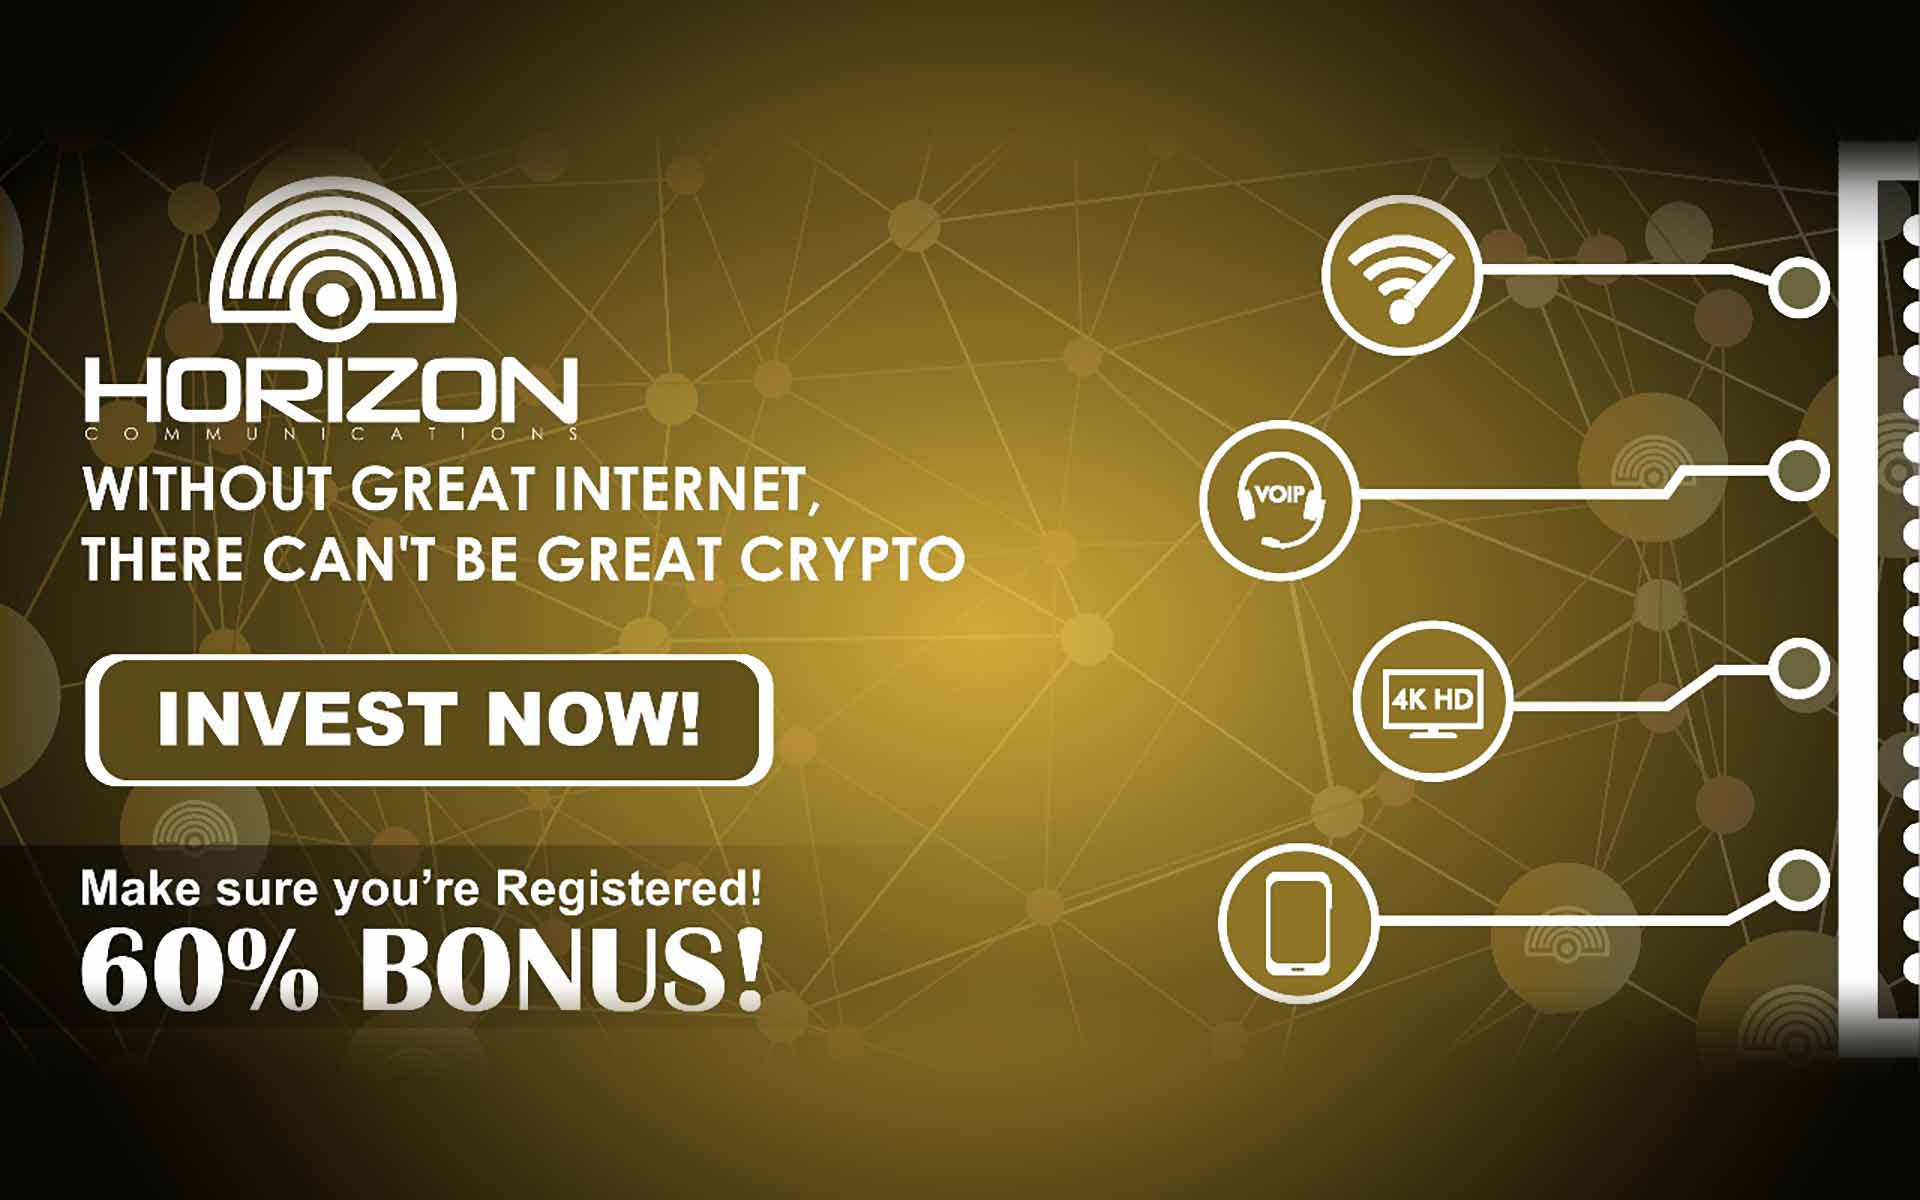 Horizon Launches Public Pre-Sale with 60% Bonus